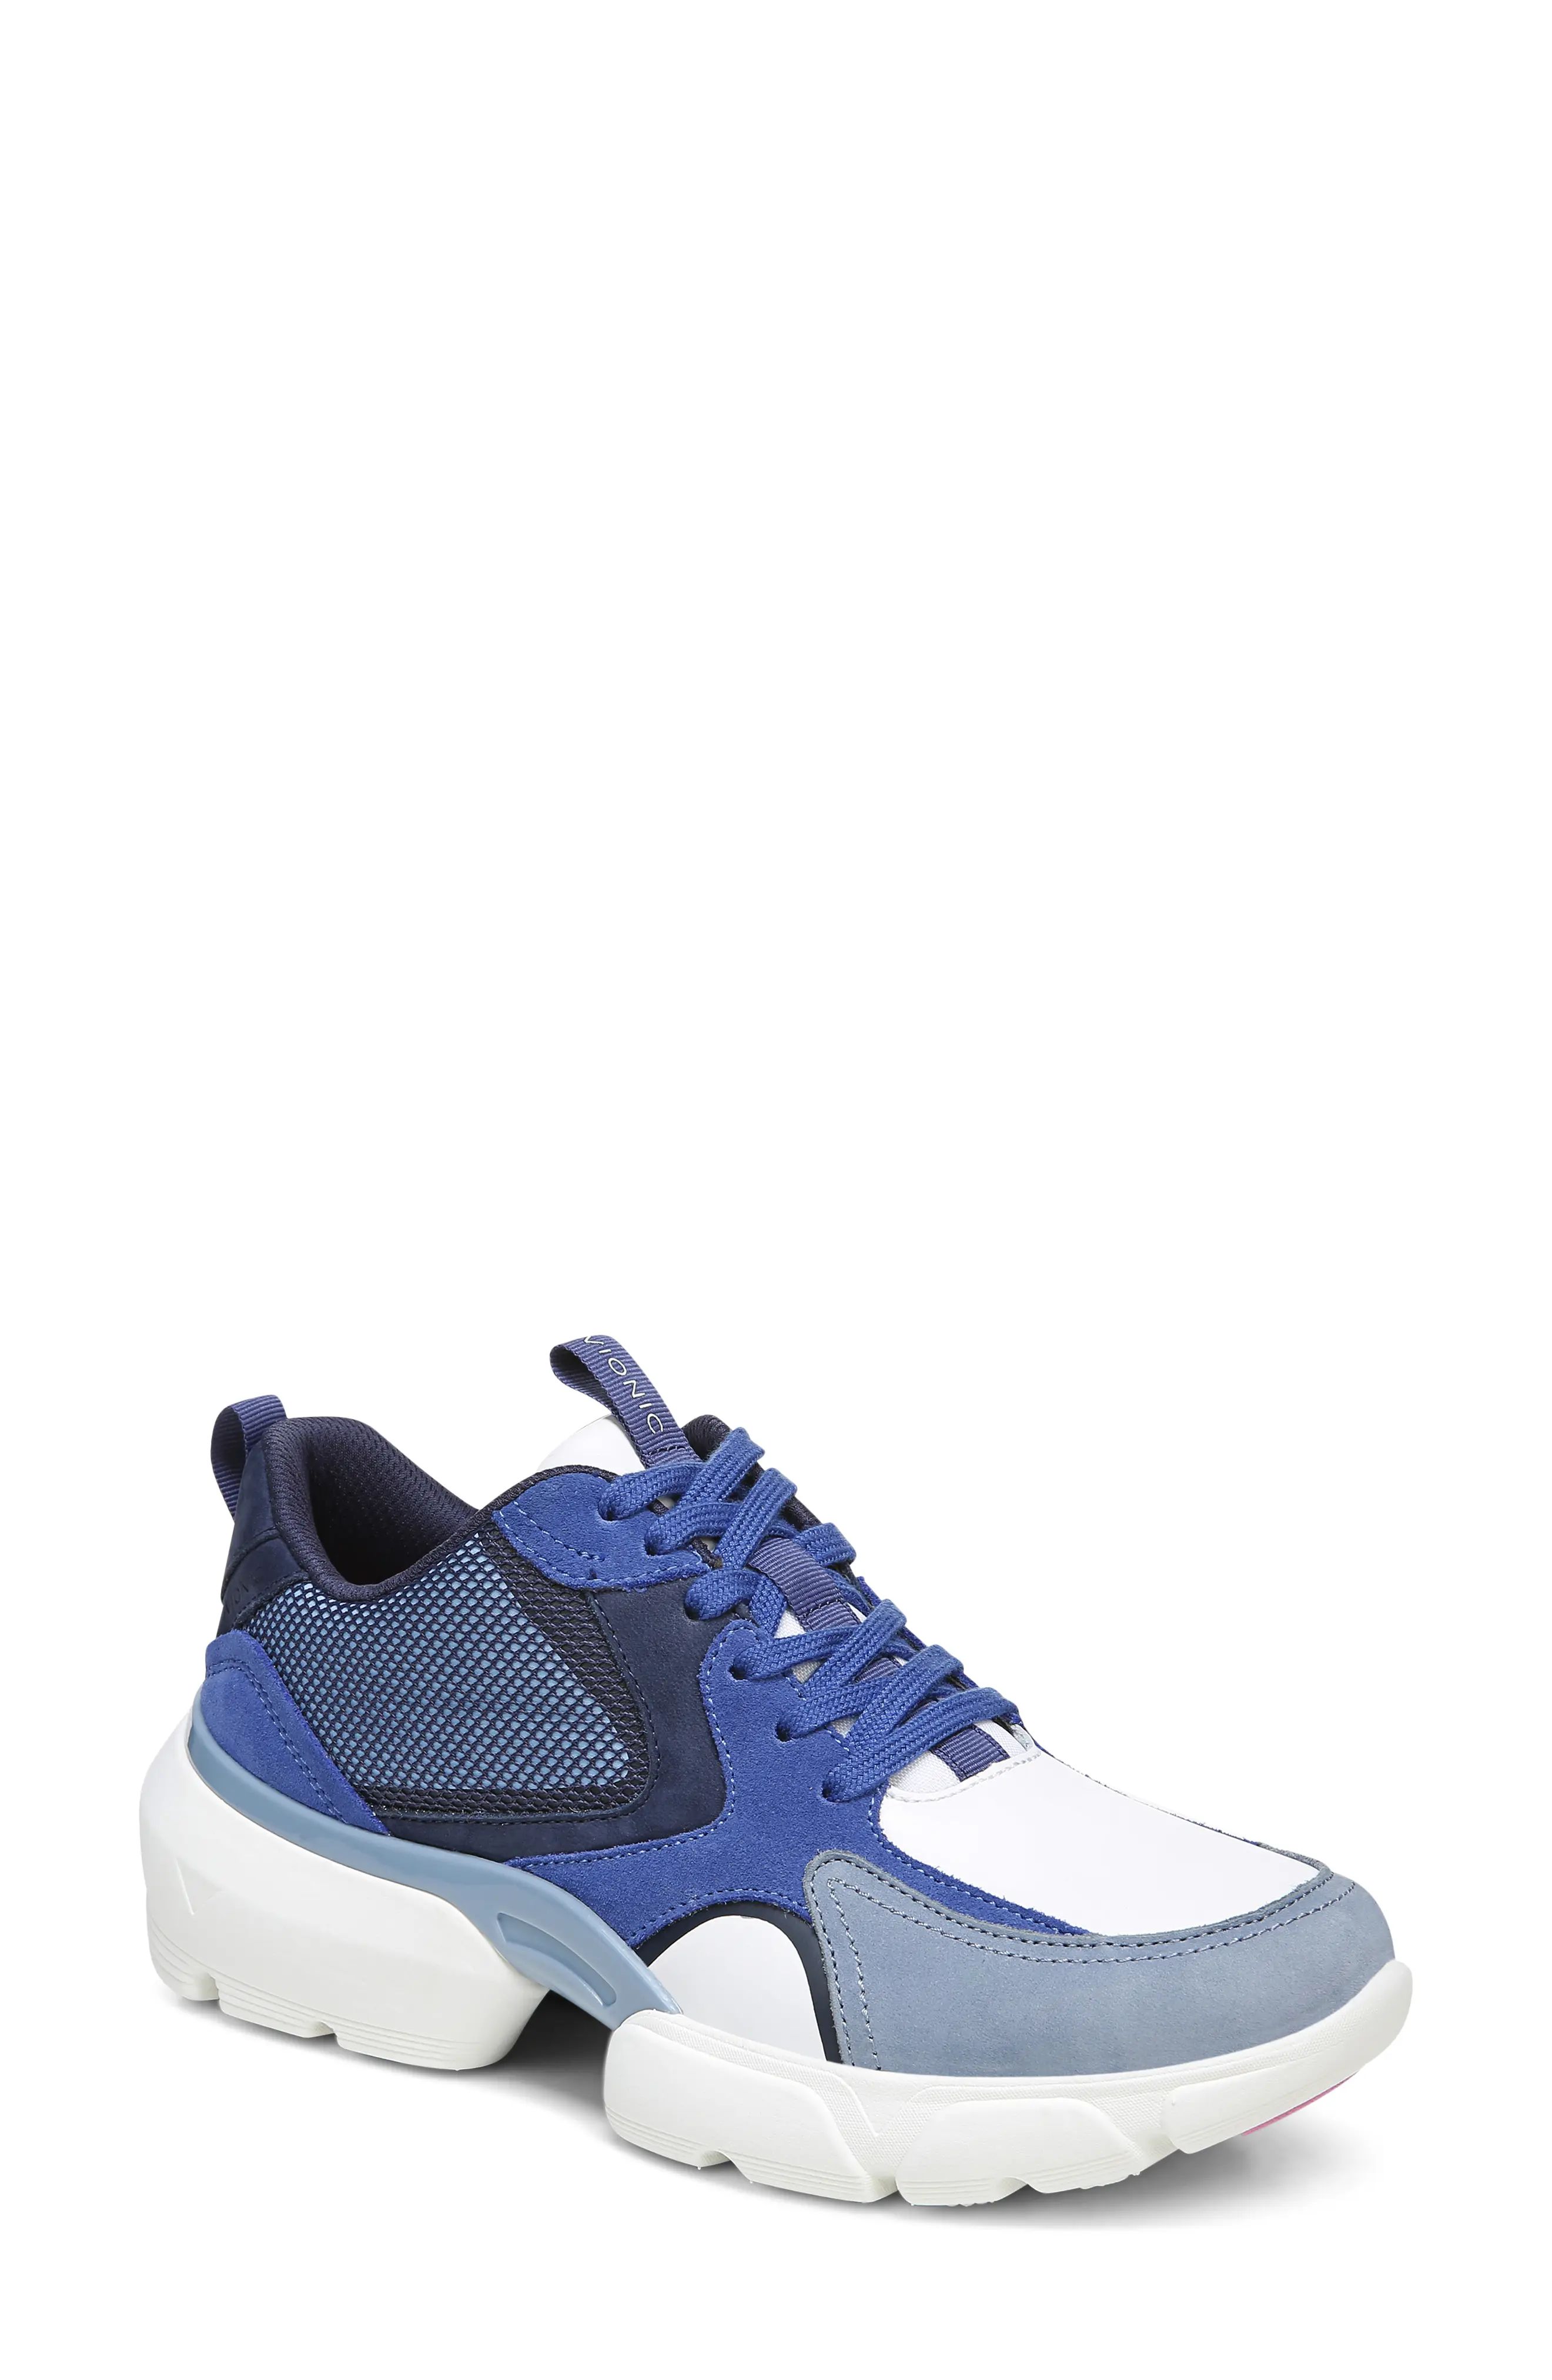 Women's Vionic Aris Sneaker, Size 7.5 M - Blue | Nordstrom